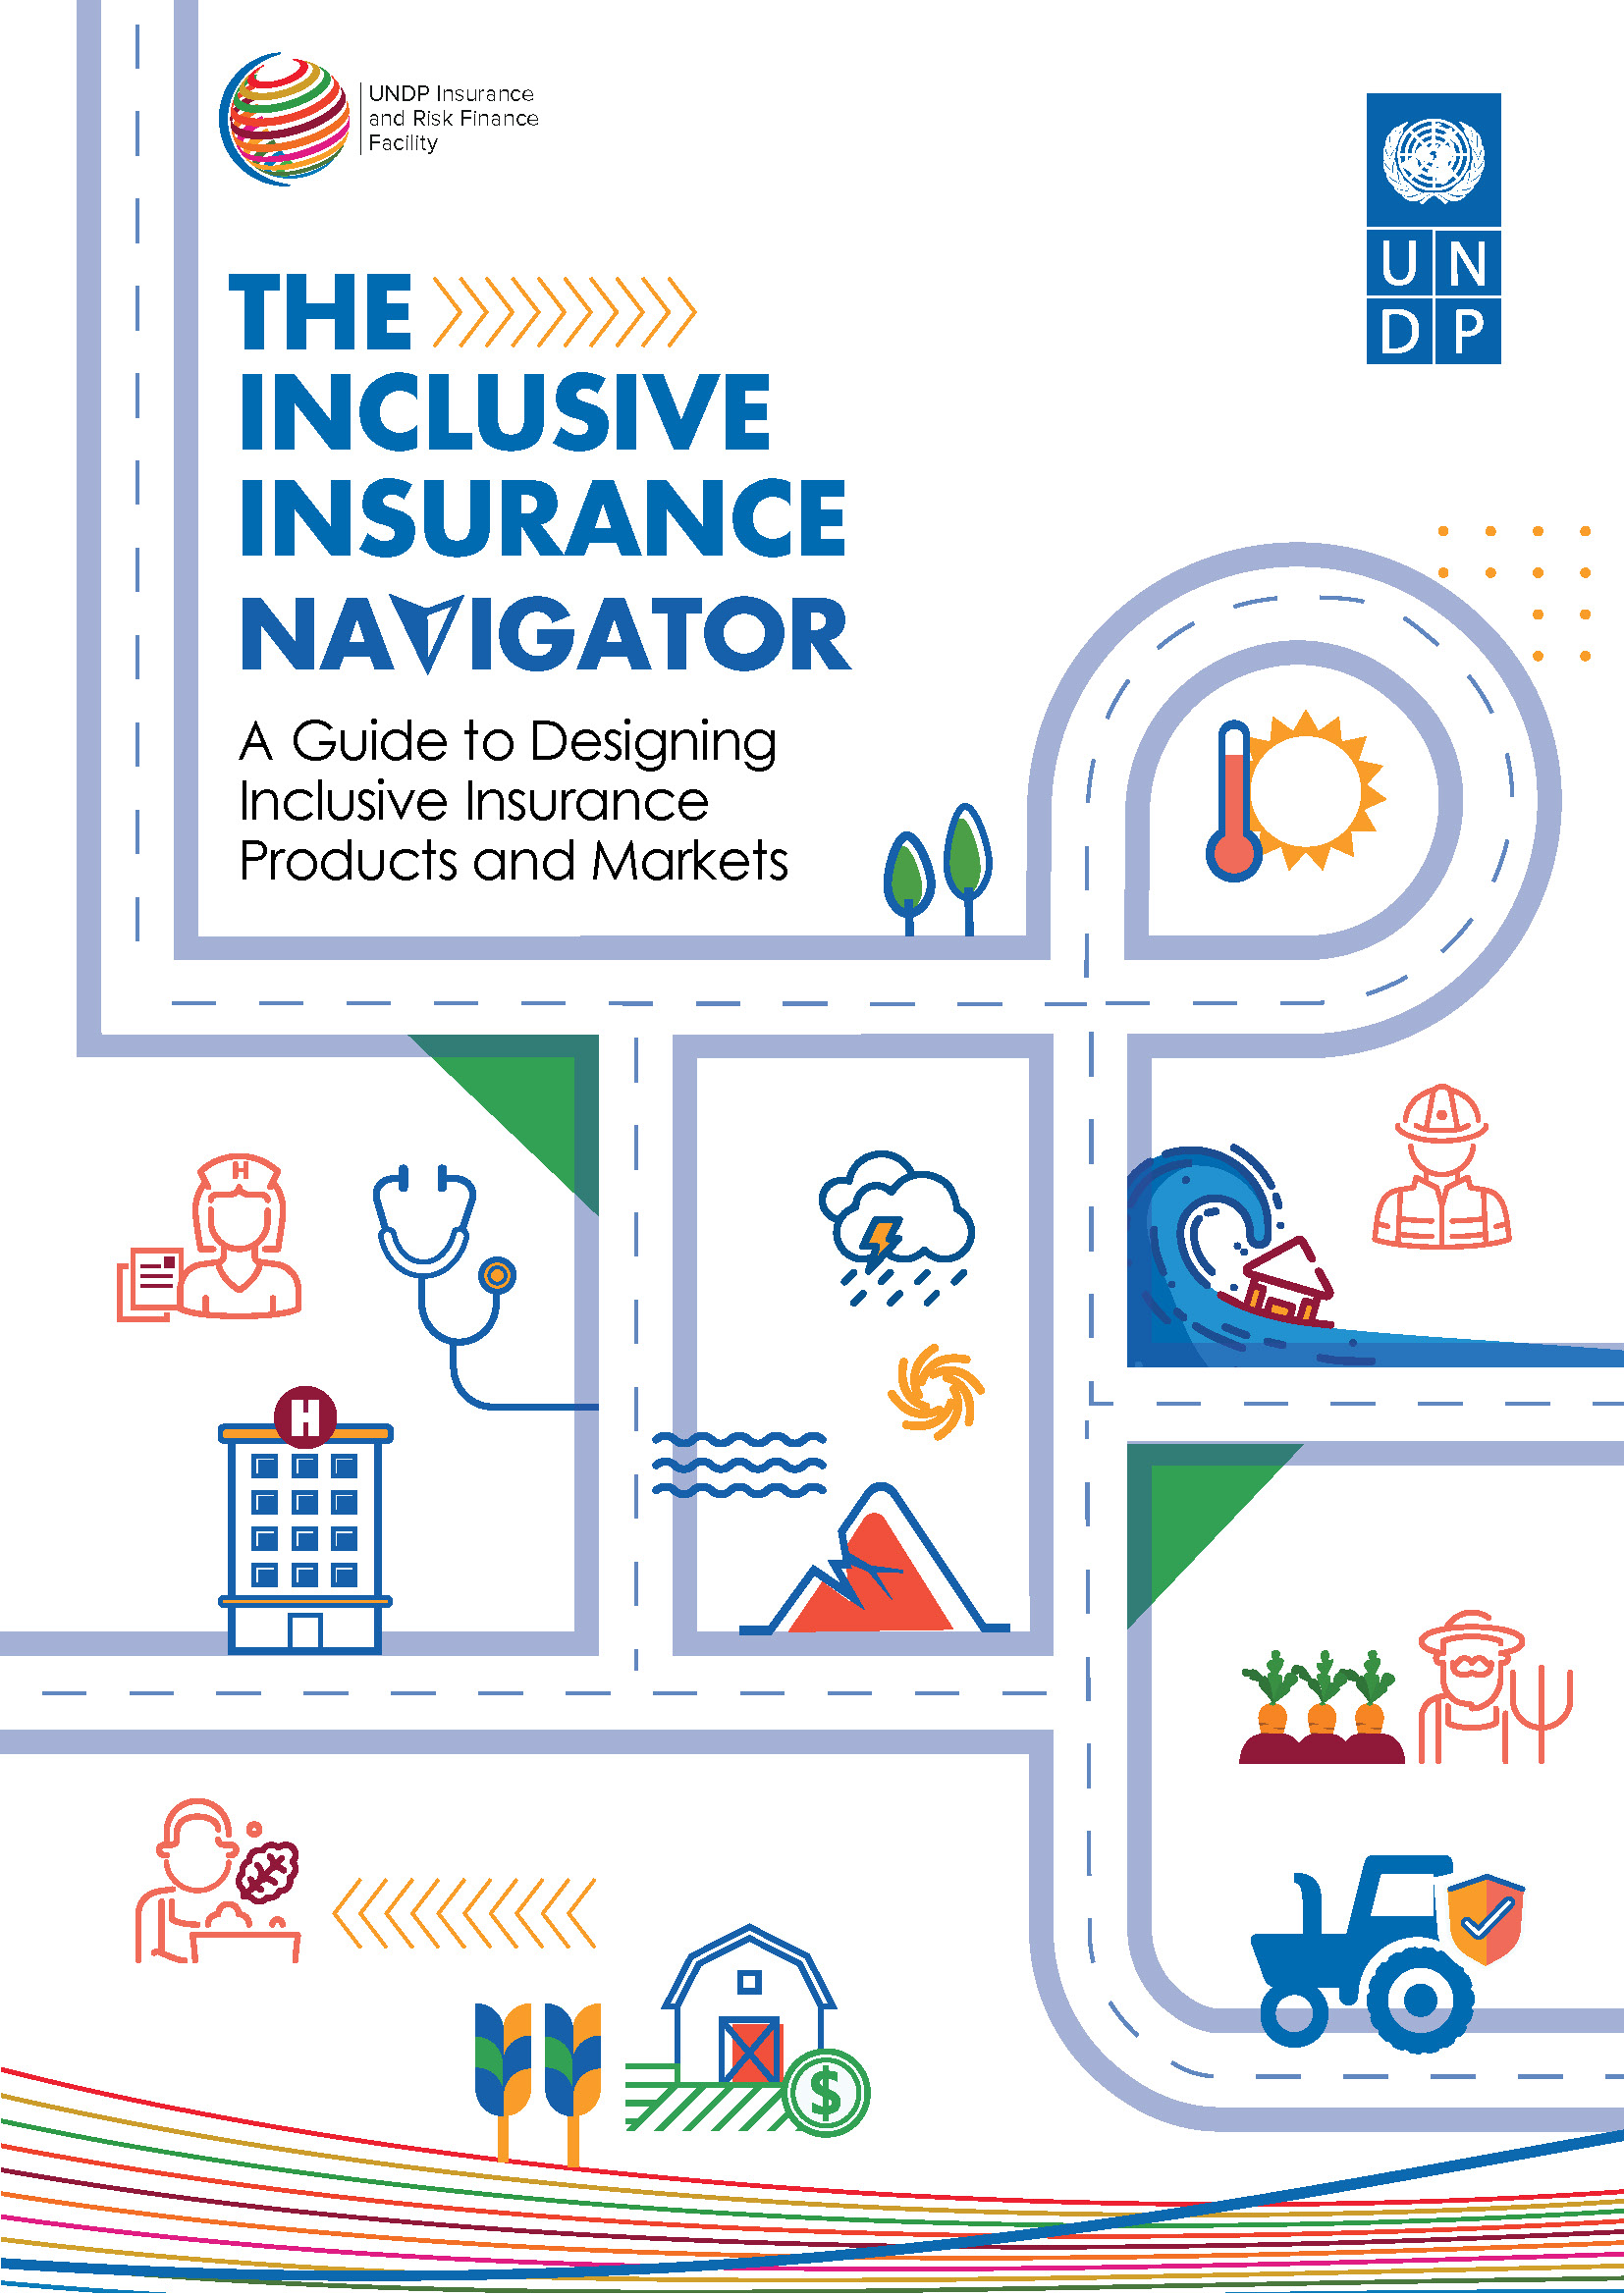 UNDP Inclusive Insurance Navigator